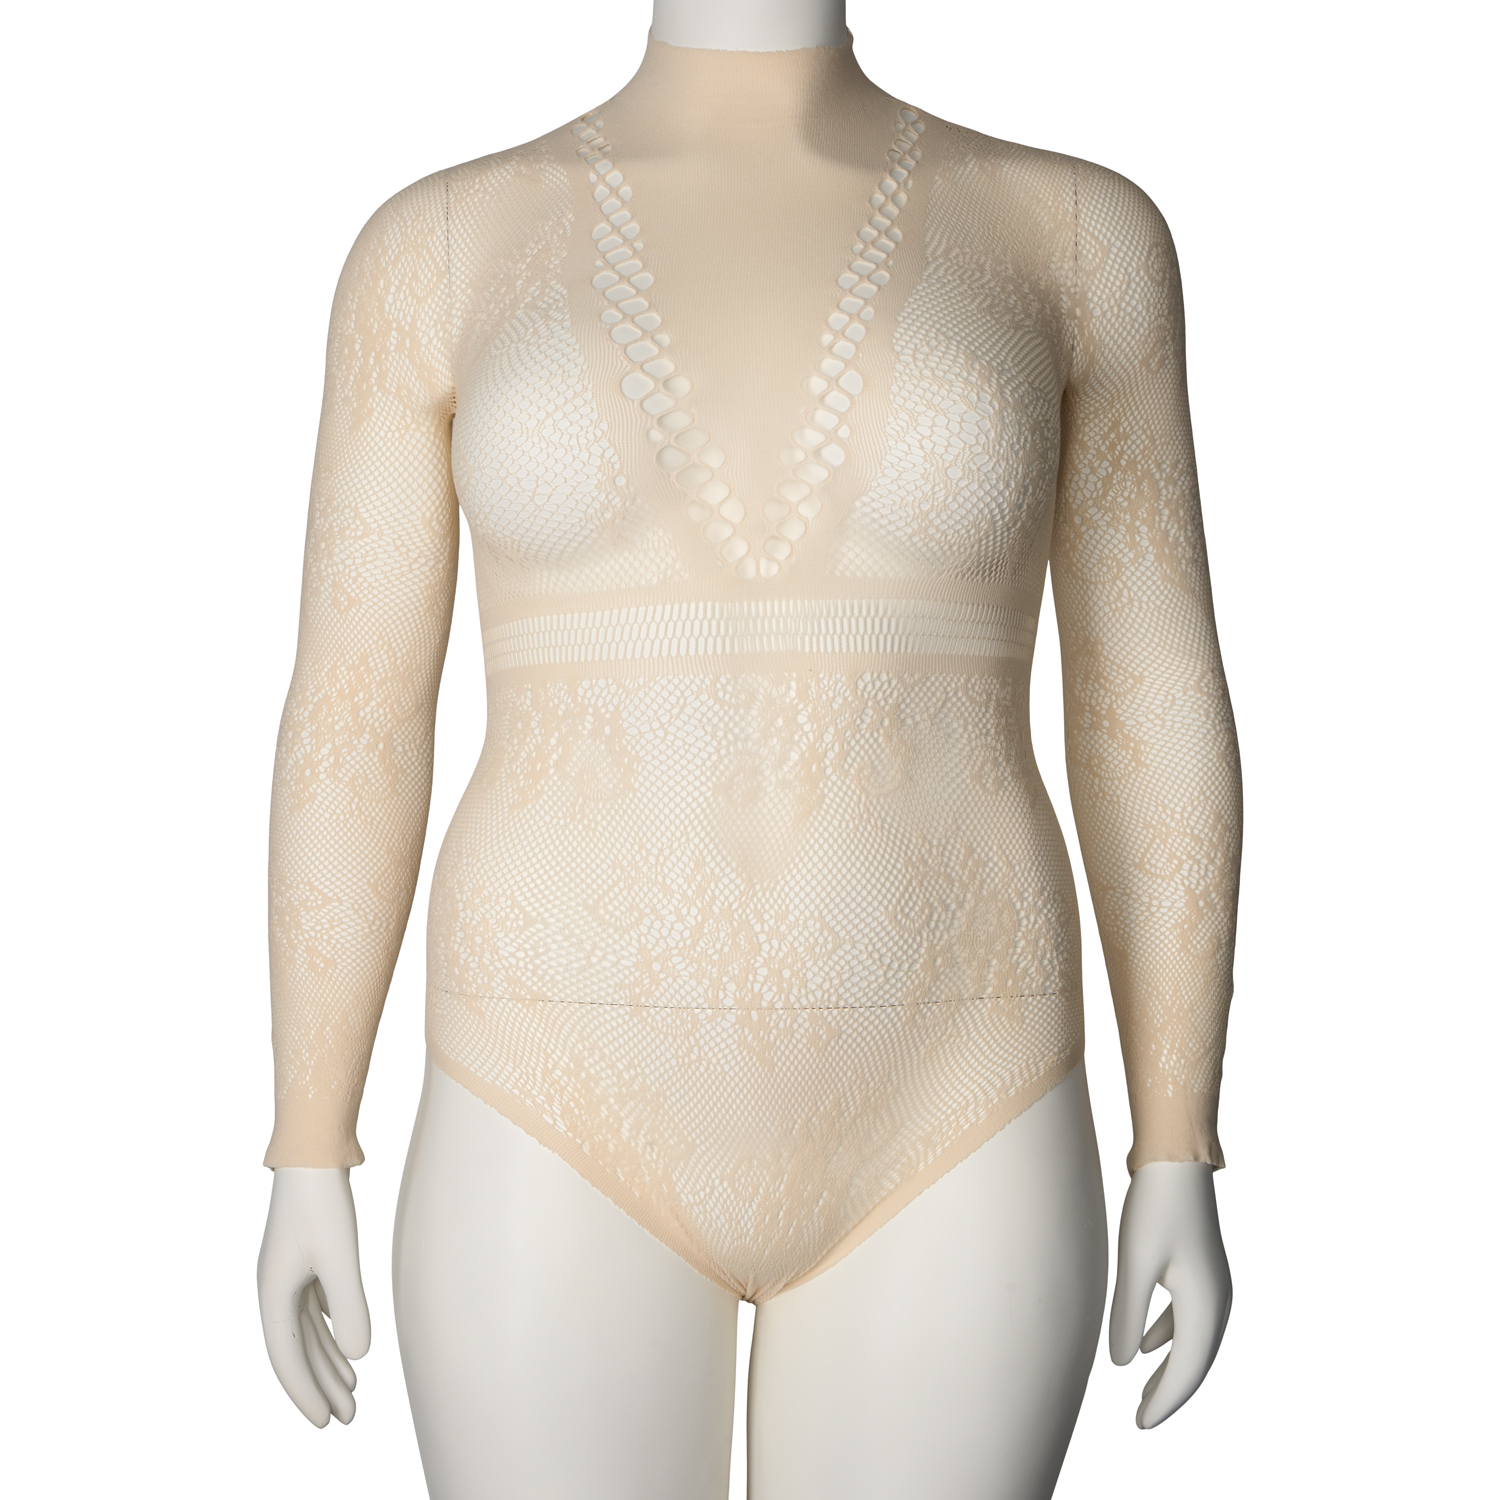 Nortie Dawn Warm Sand Bodystocking Plus Size    - Nude thumbnail